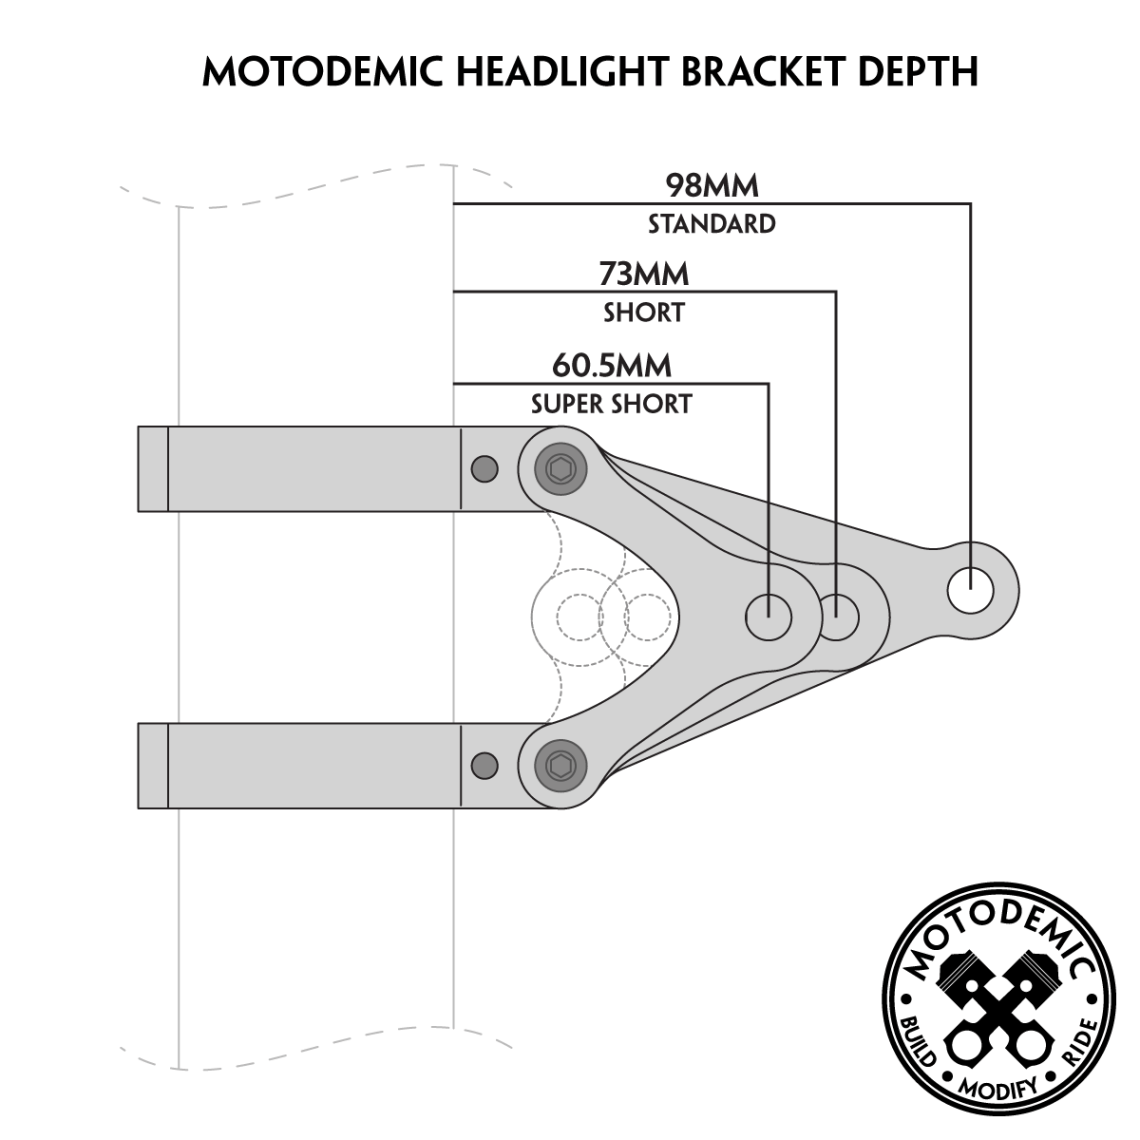 40mm Motodemic Headlight Brackets